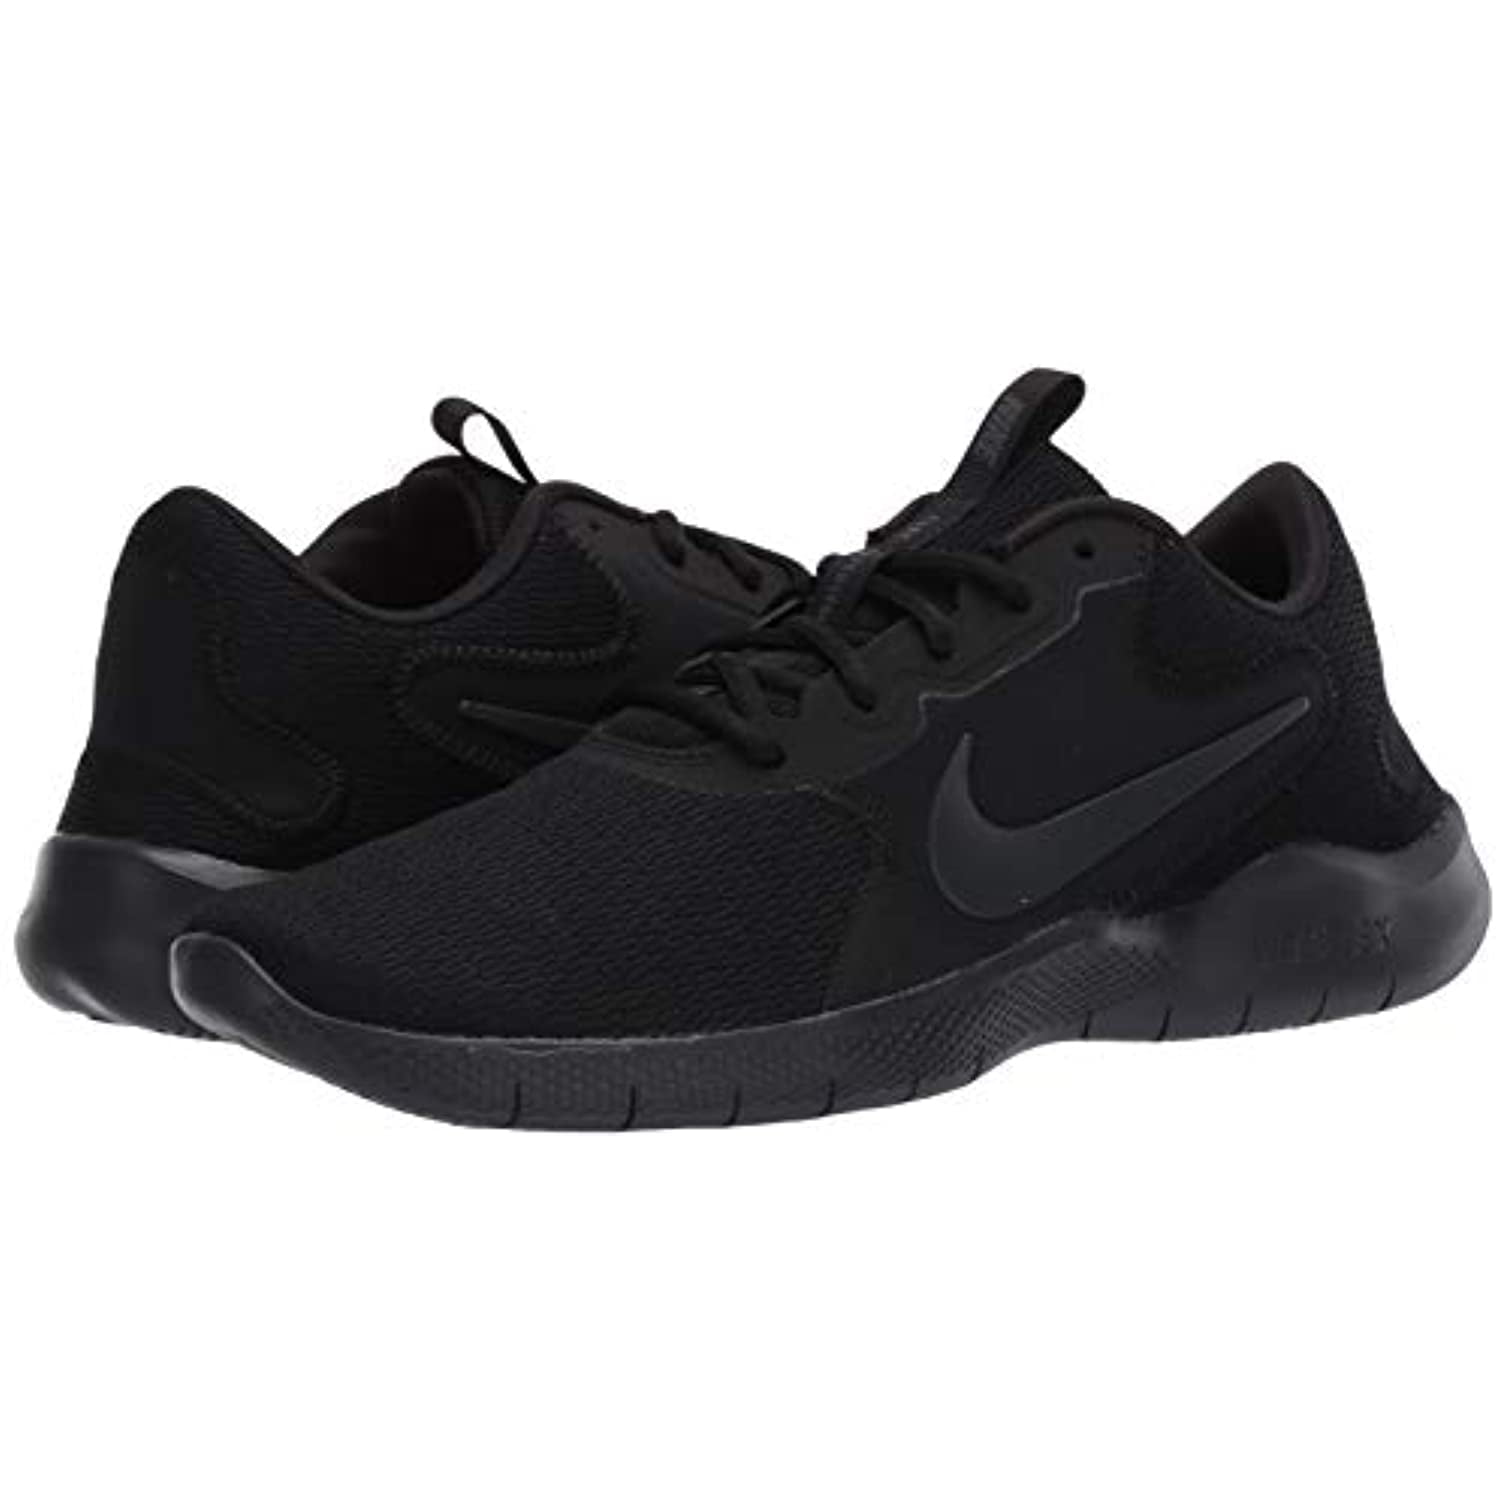 Nike Men's Experience 9 Shoe, Black/Dark Grey, 6 4E US - Walmart.com